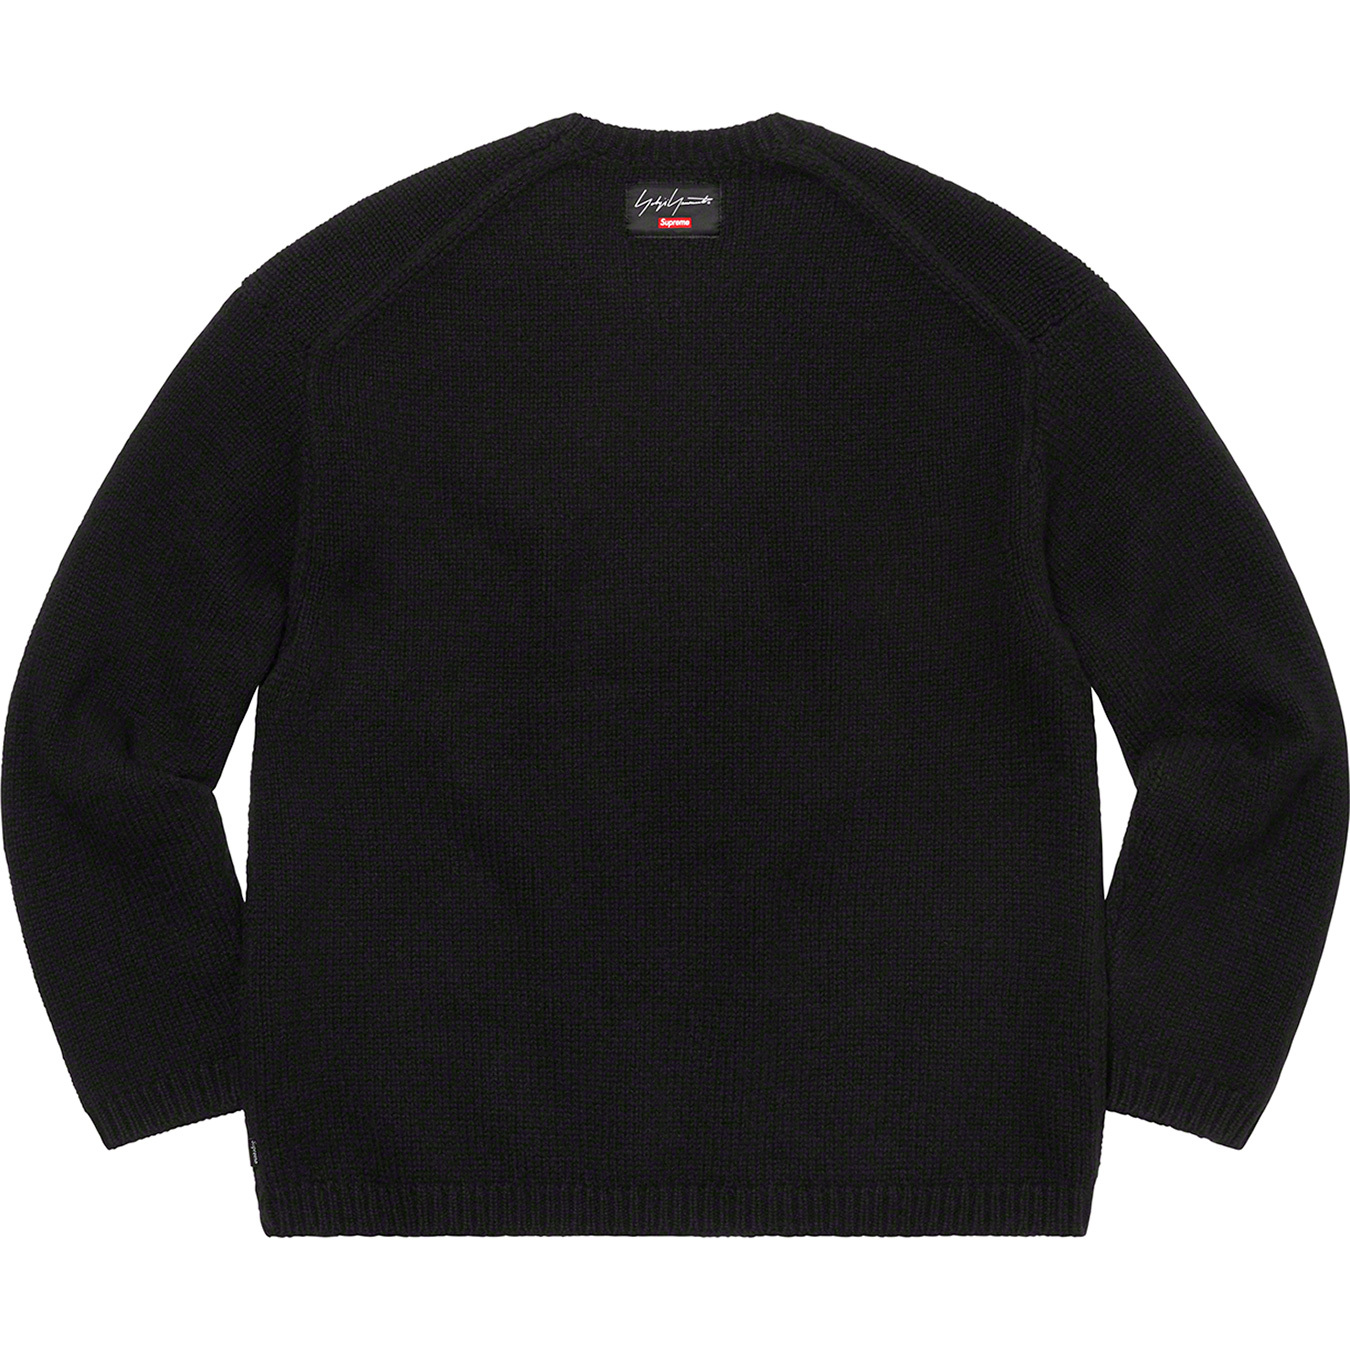 Supreme®/Yohji Yamamoto® Sweater